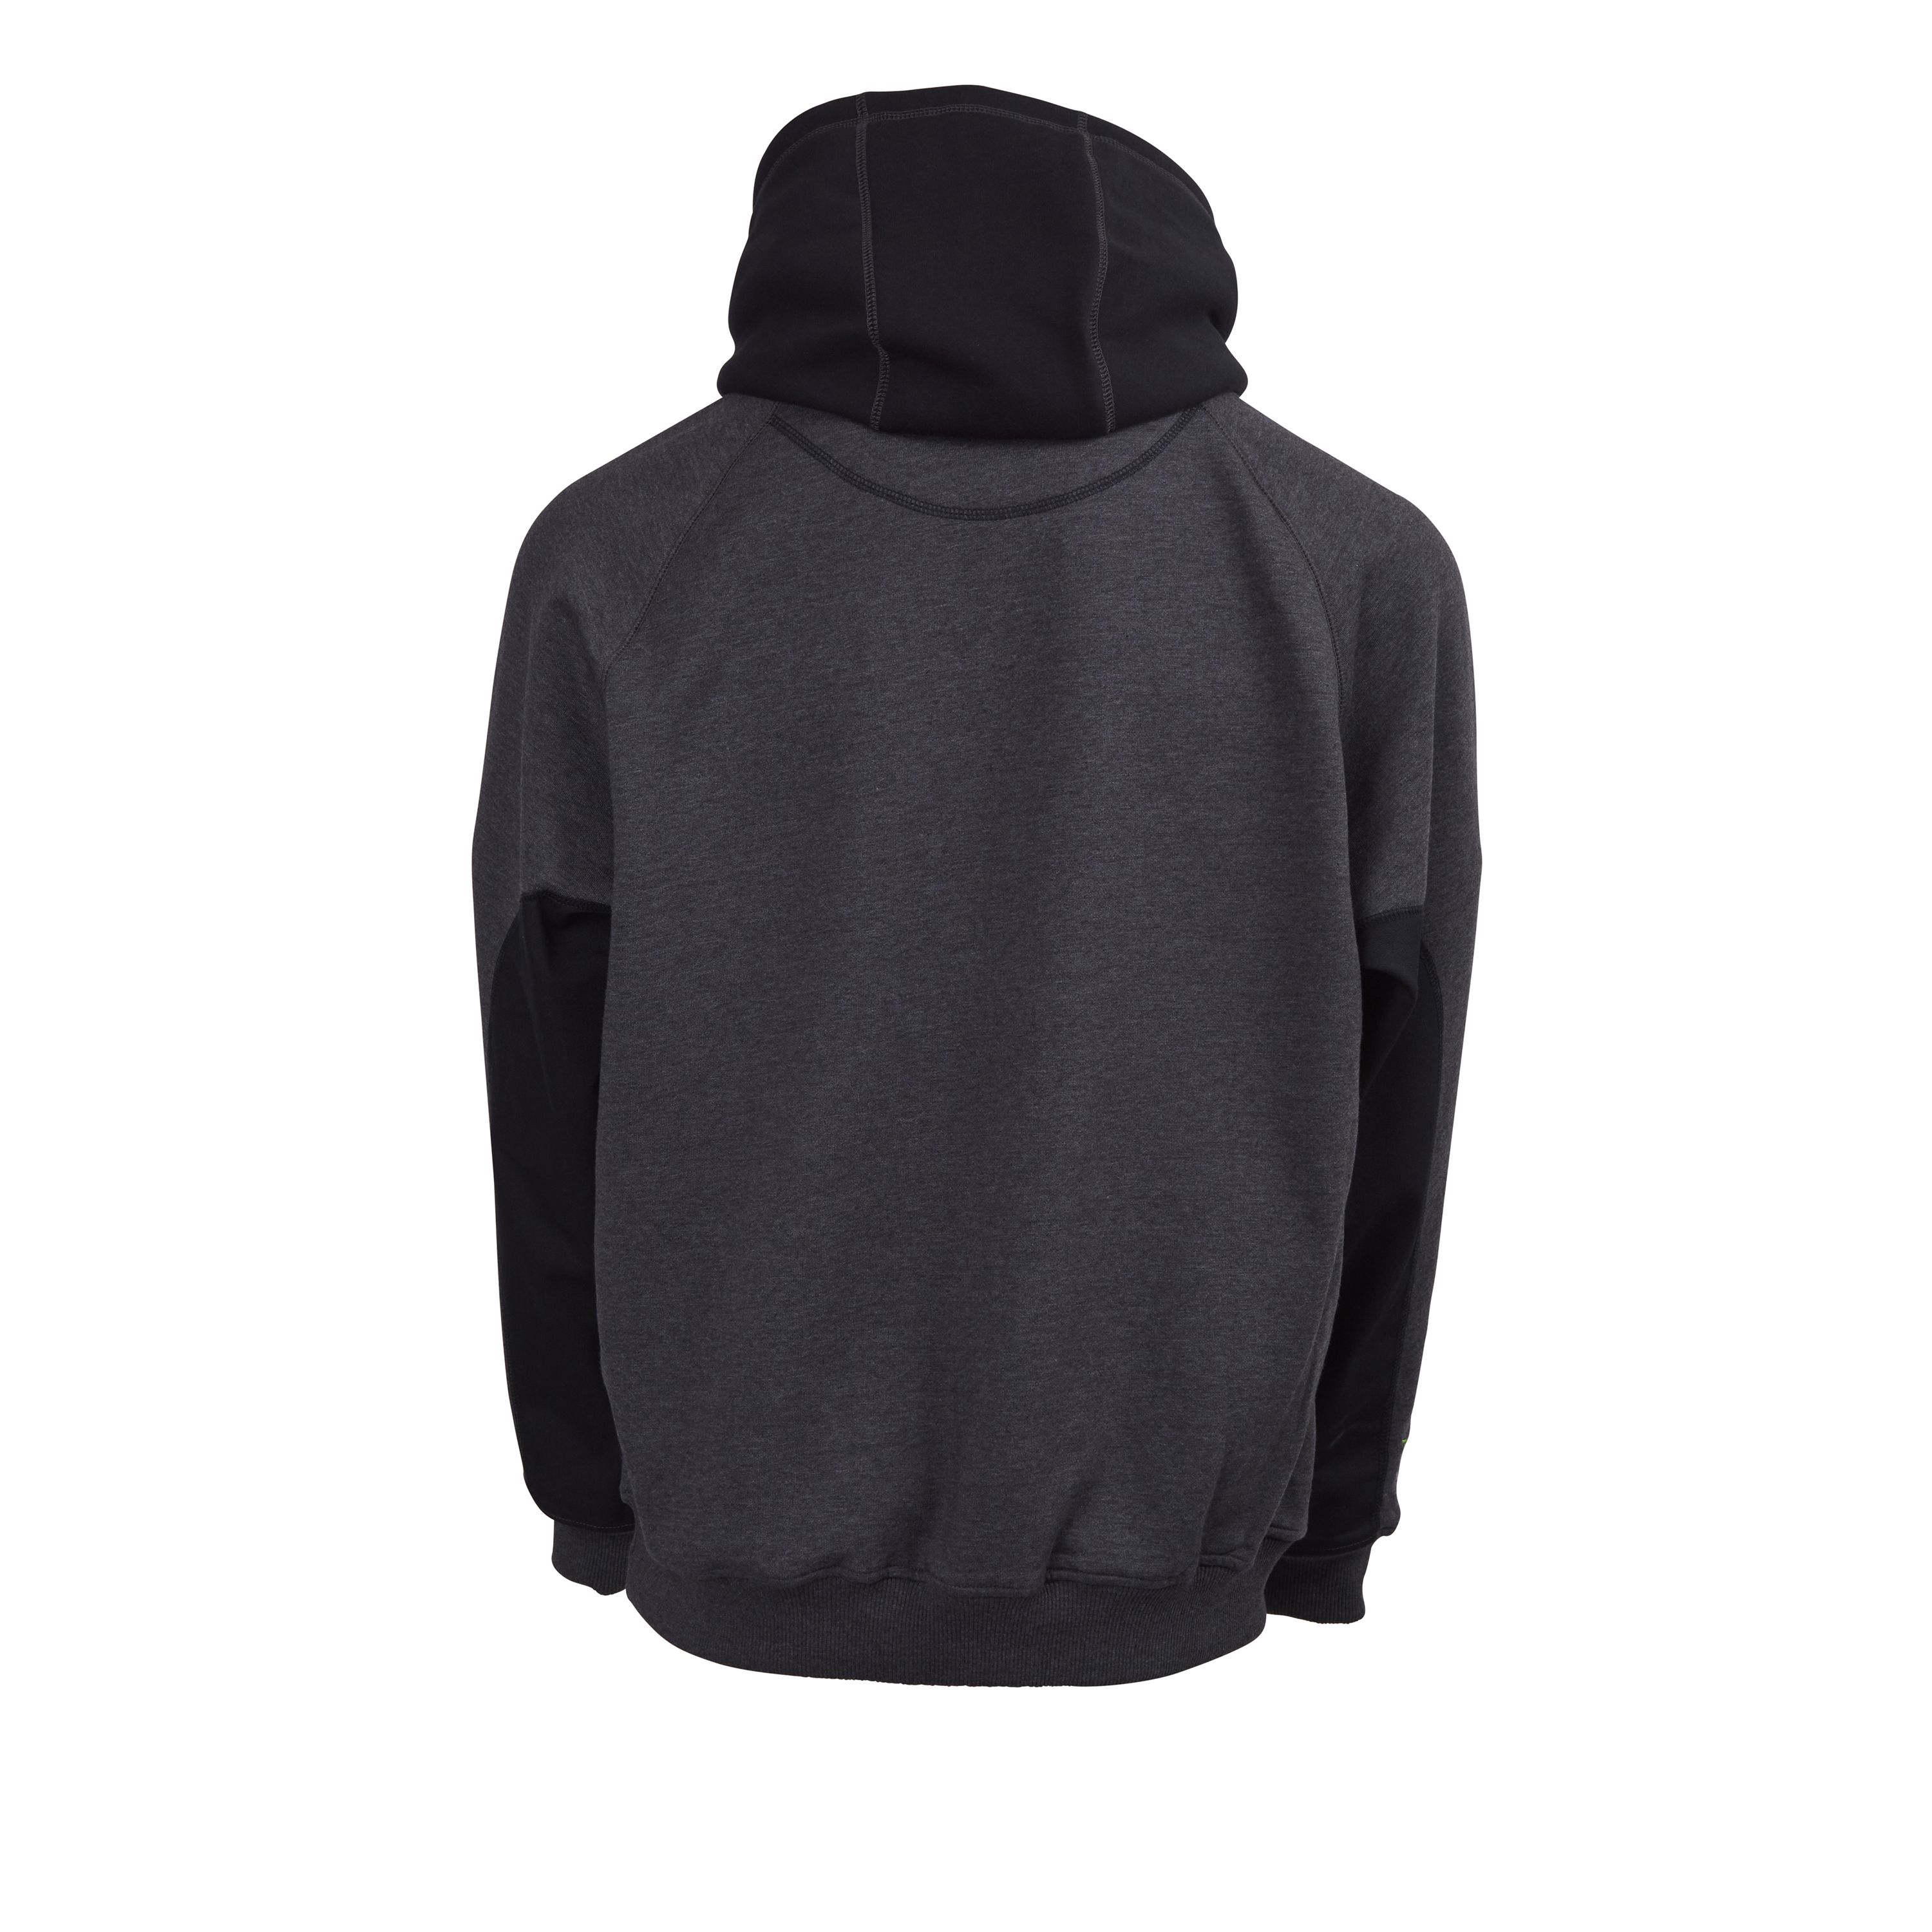 Apache Industrial Wear Grey & black Men's Hooded sweatshirt X Large